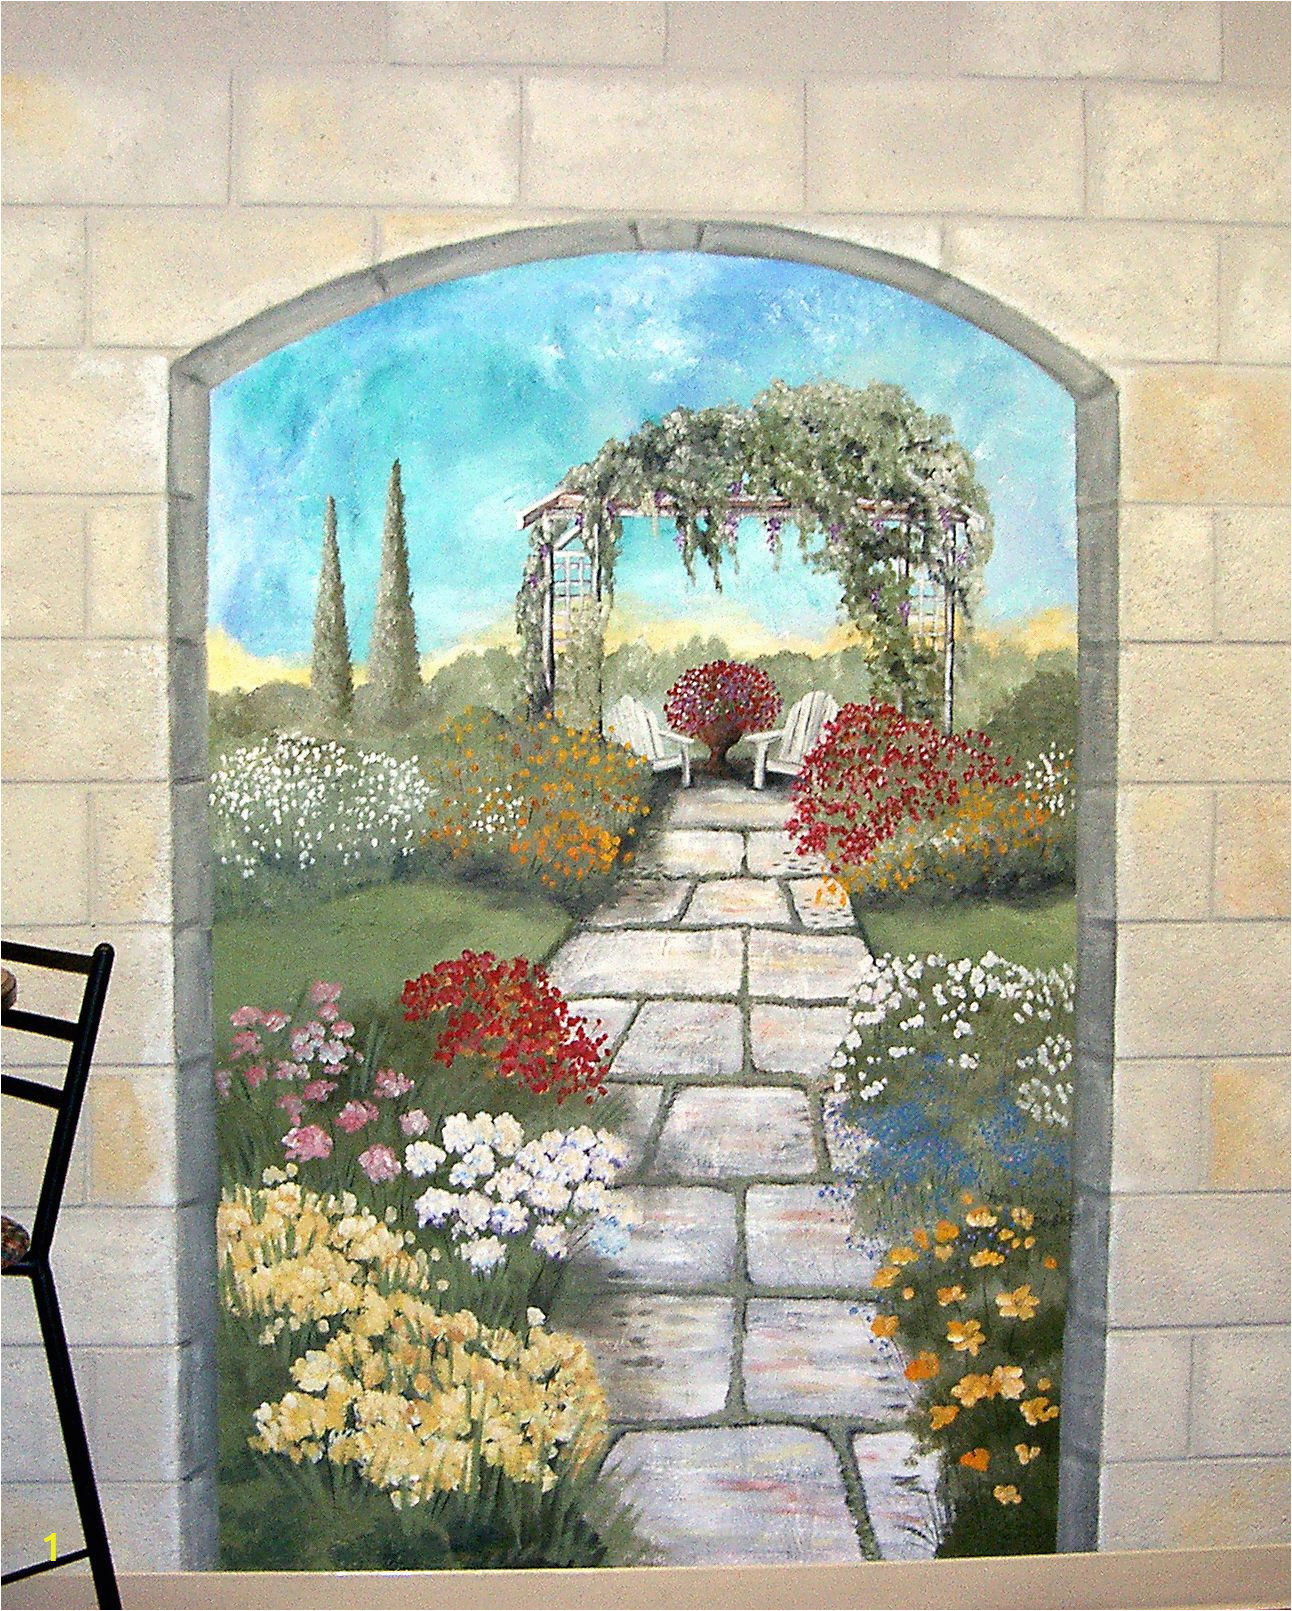 Wall Murals In orange County Garden Mural On A Cement Block Wall Colorful Flower Garden